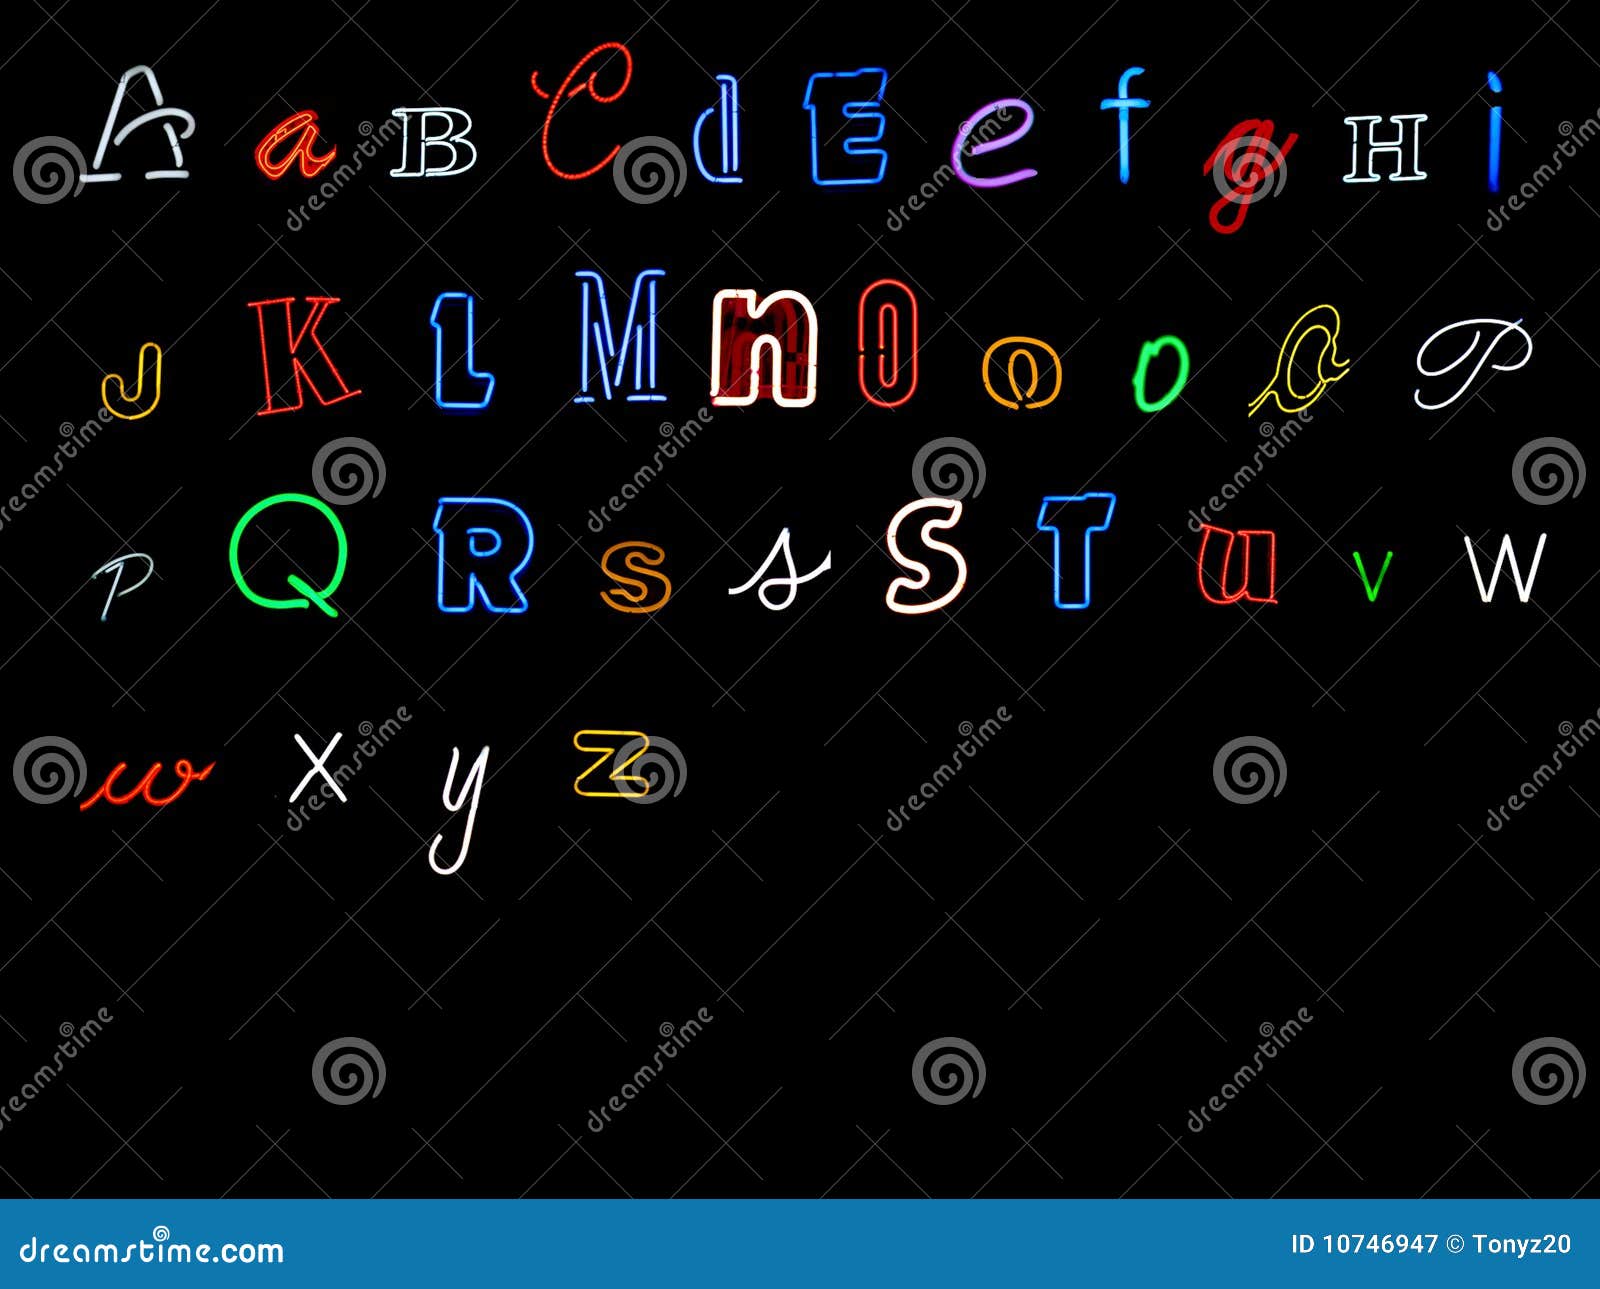 Neon alphabet letters stock illustration. Illustration of case - 10746947